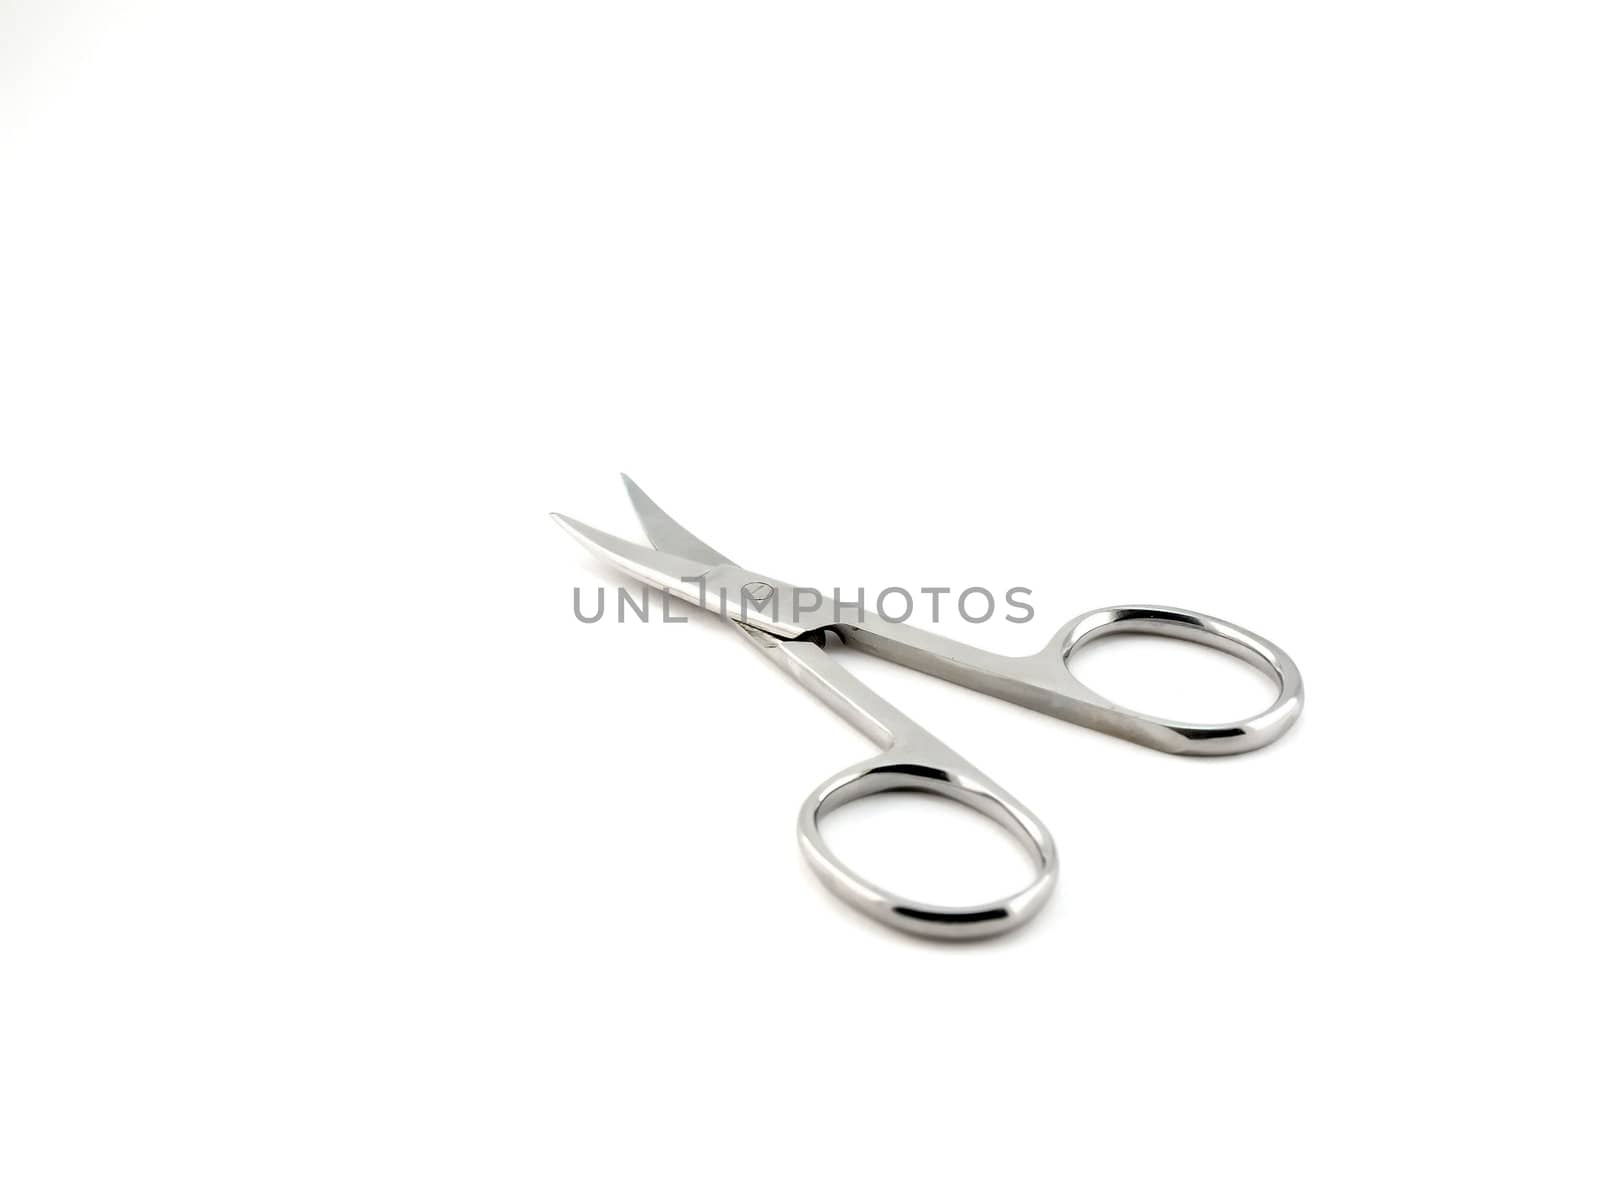 Nail scissors by sergpet